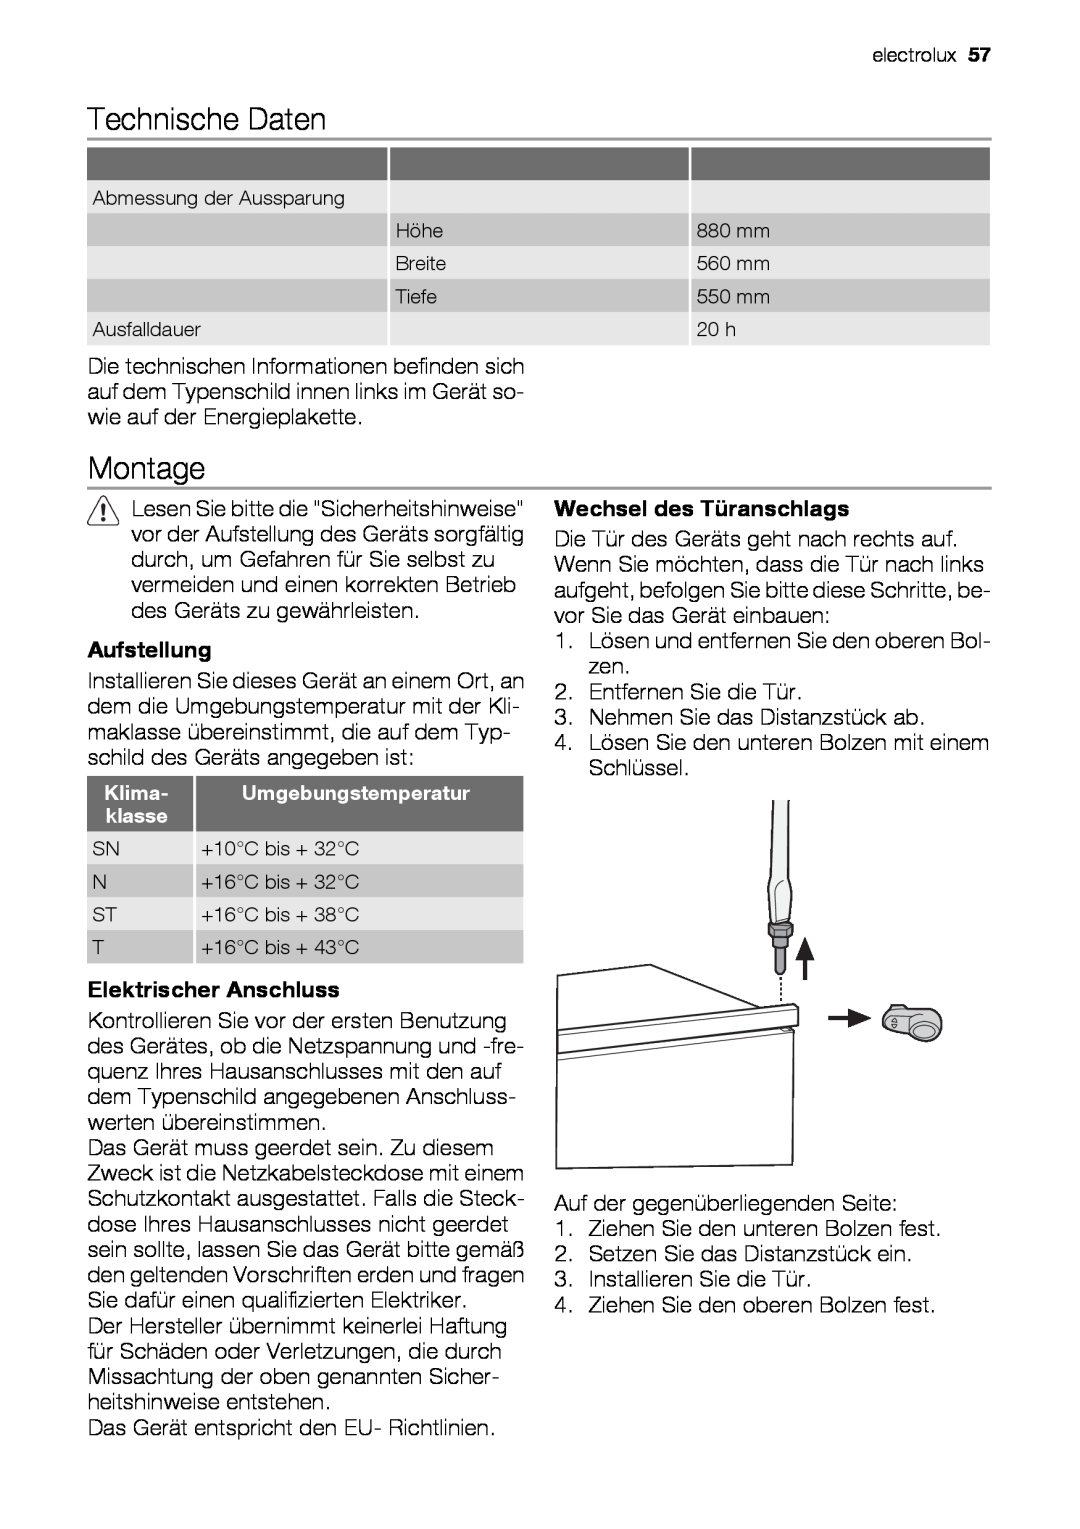 Electrolux EUN12510 user manual Technische Daten, Aufstellung, Wechsel des Türanschlags, Elektrischer Anschluss, Montage 